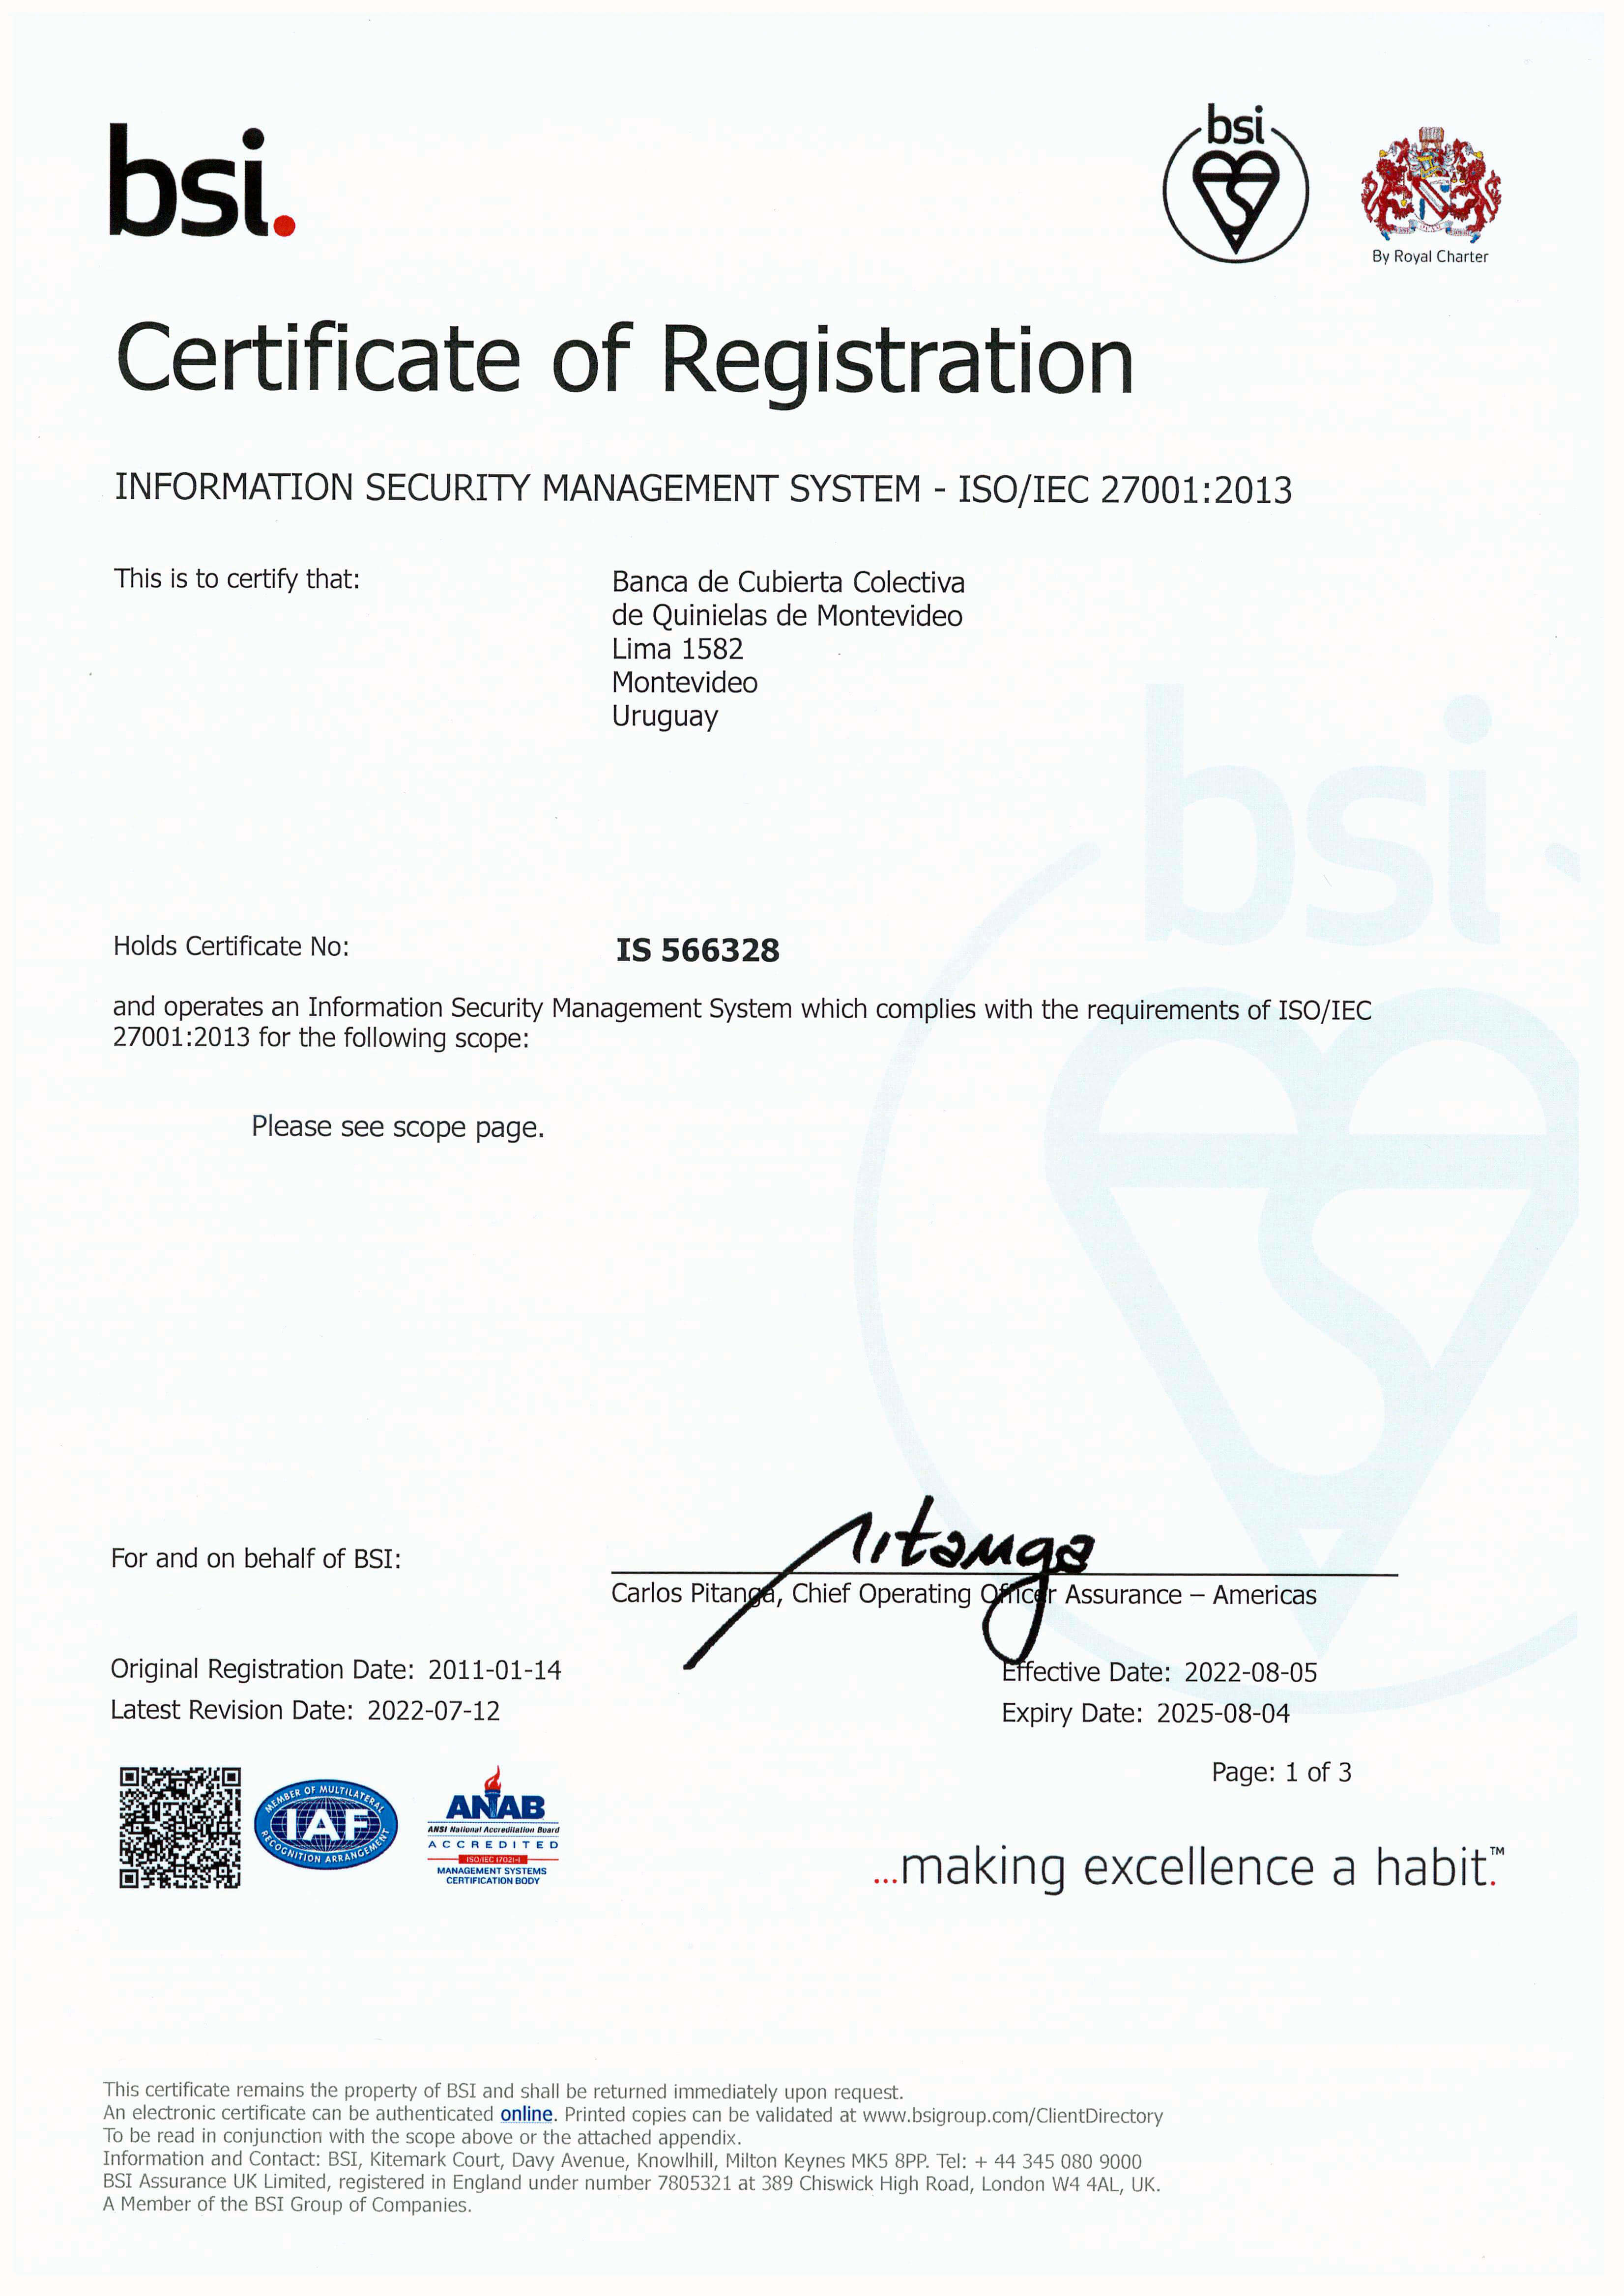 Certificadobsi1